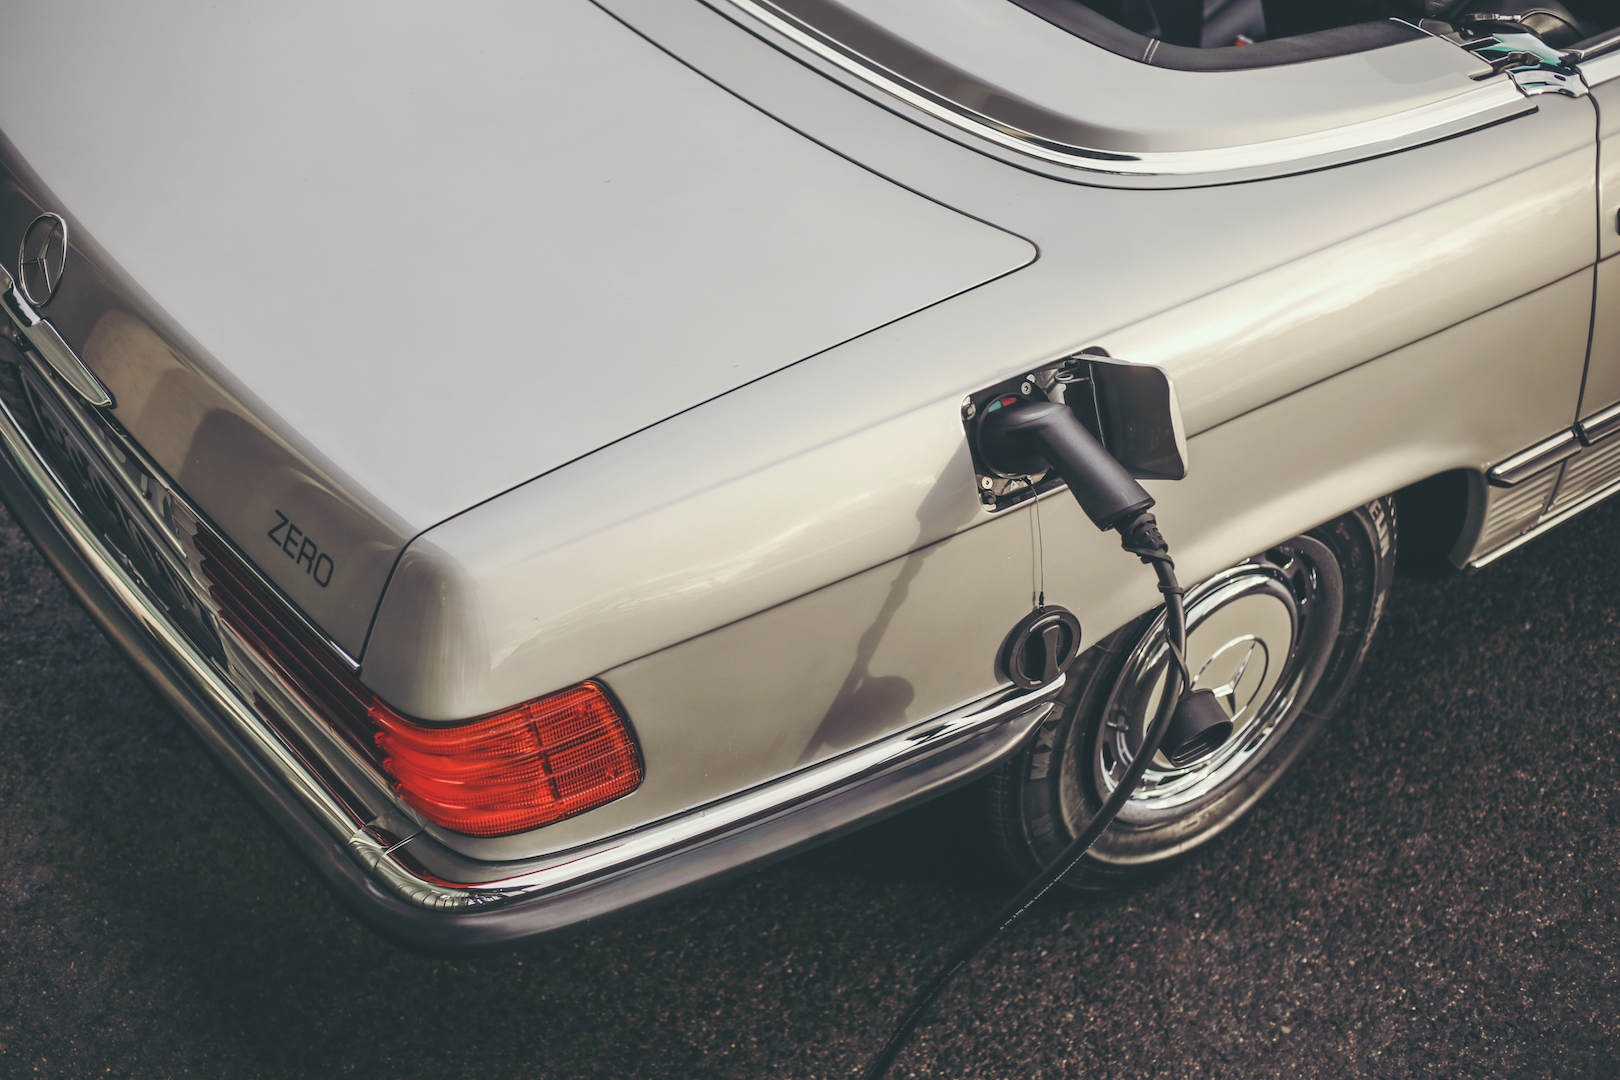 Electric classic Mercedes Benz